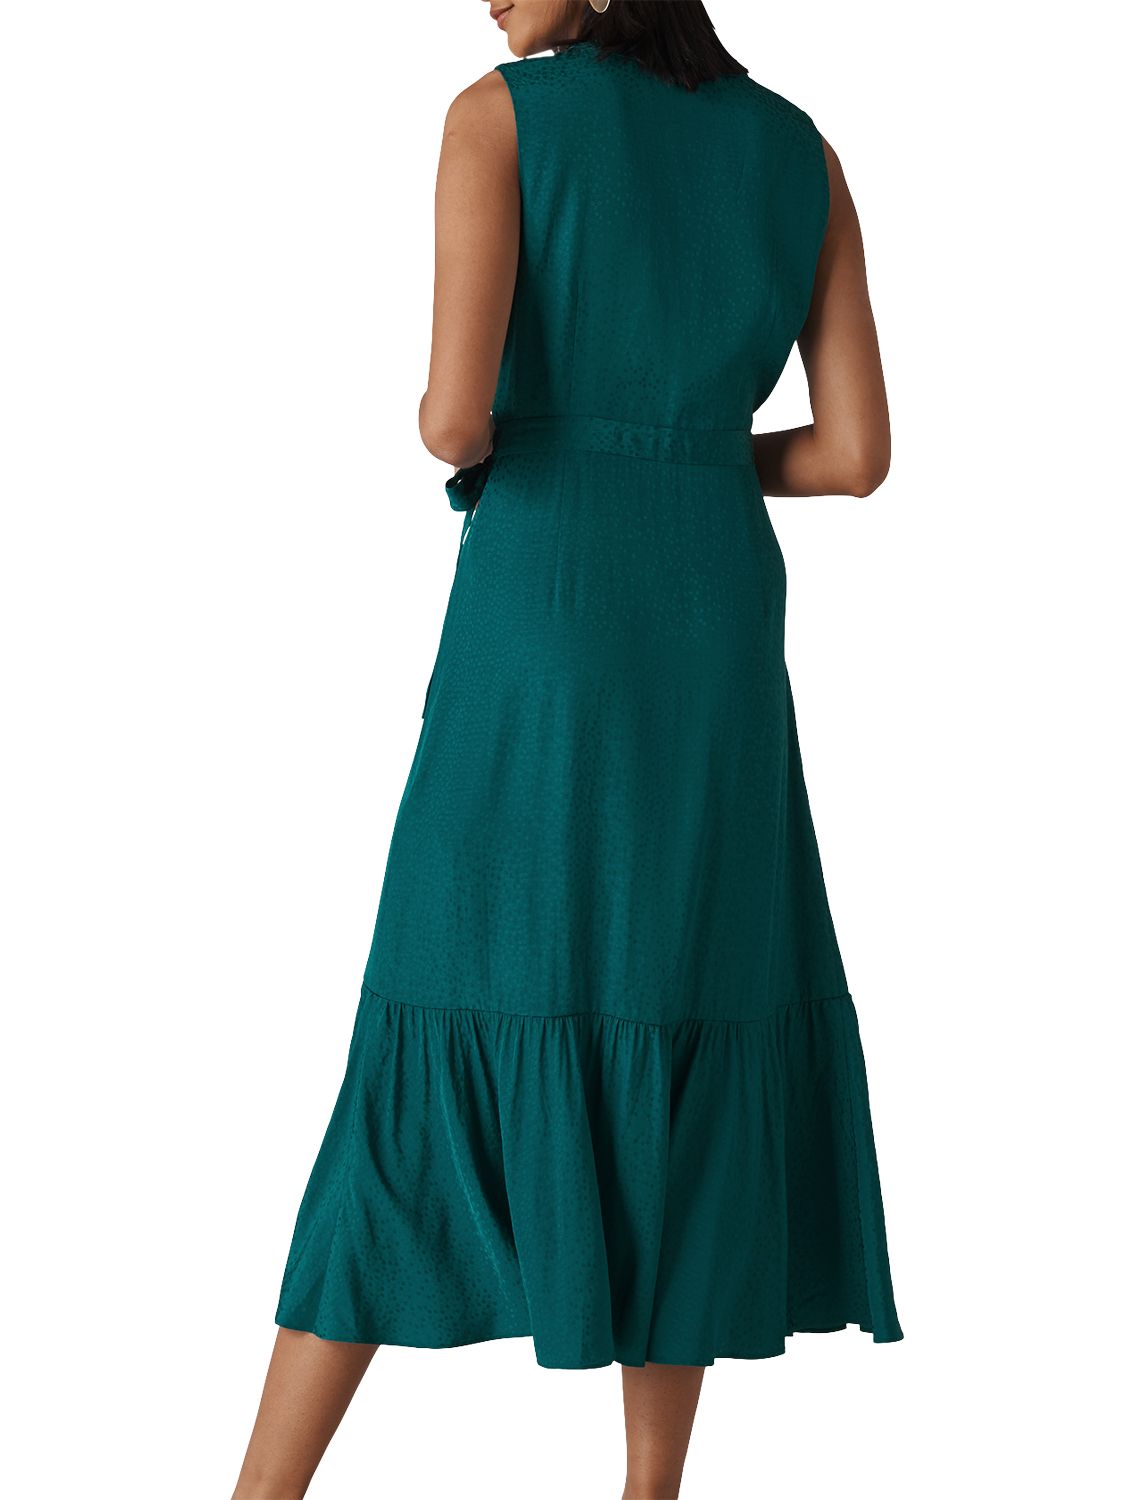 Whistles Francesca Jacquard Wrap Dress, Green at John Lewis & Partners